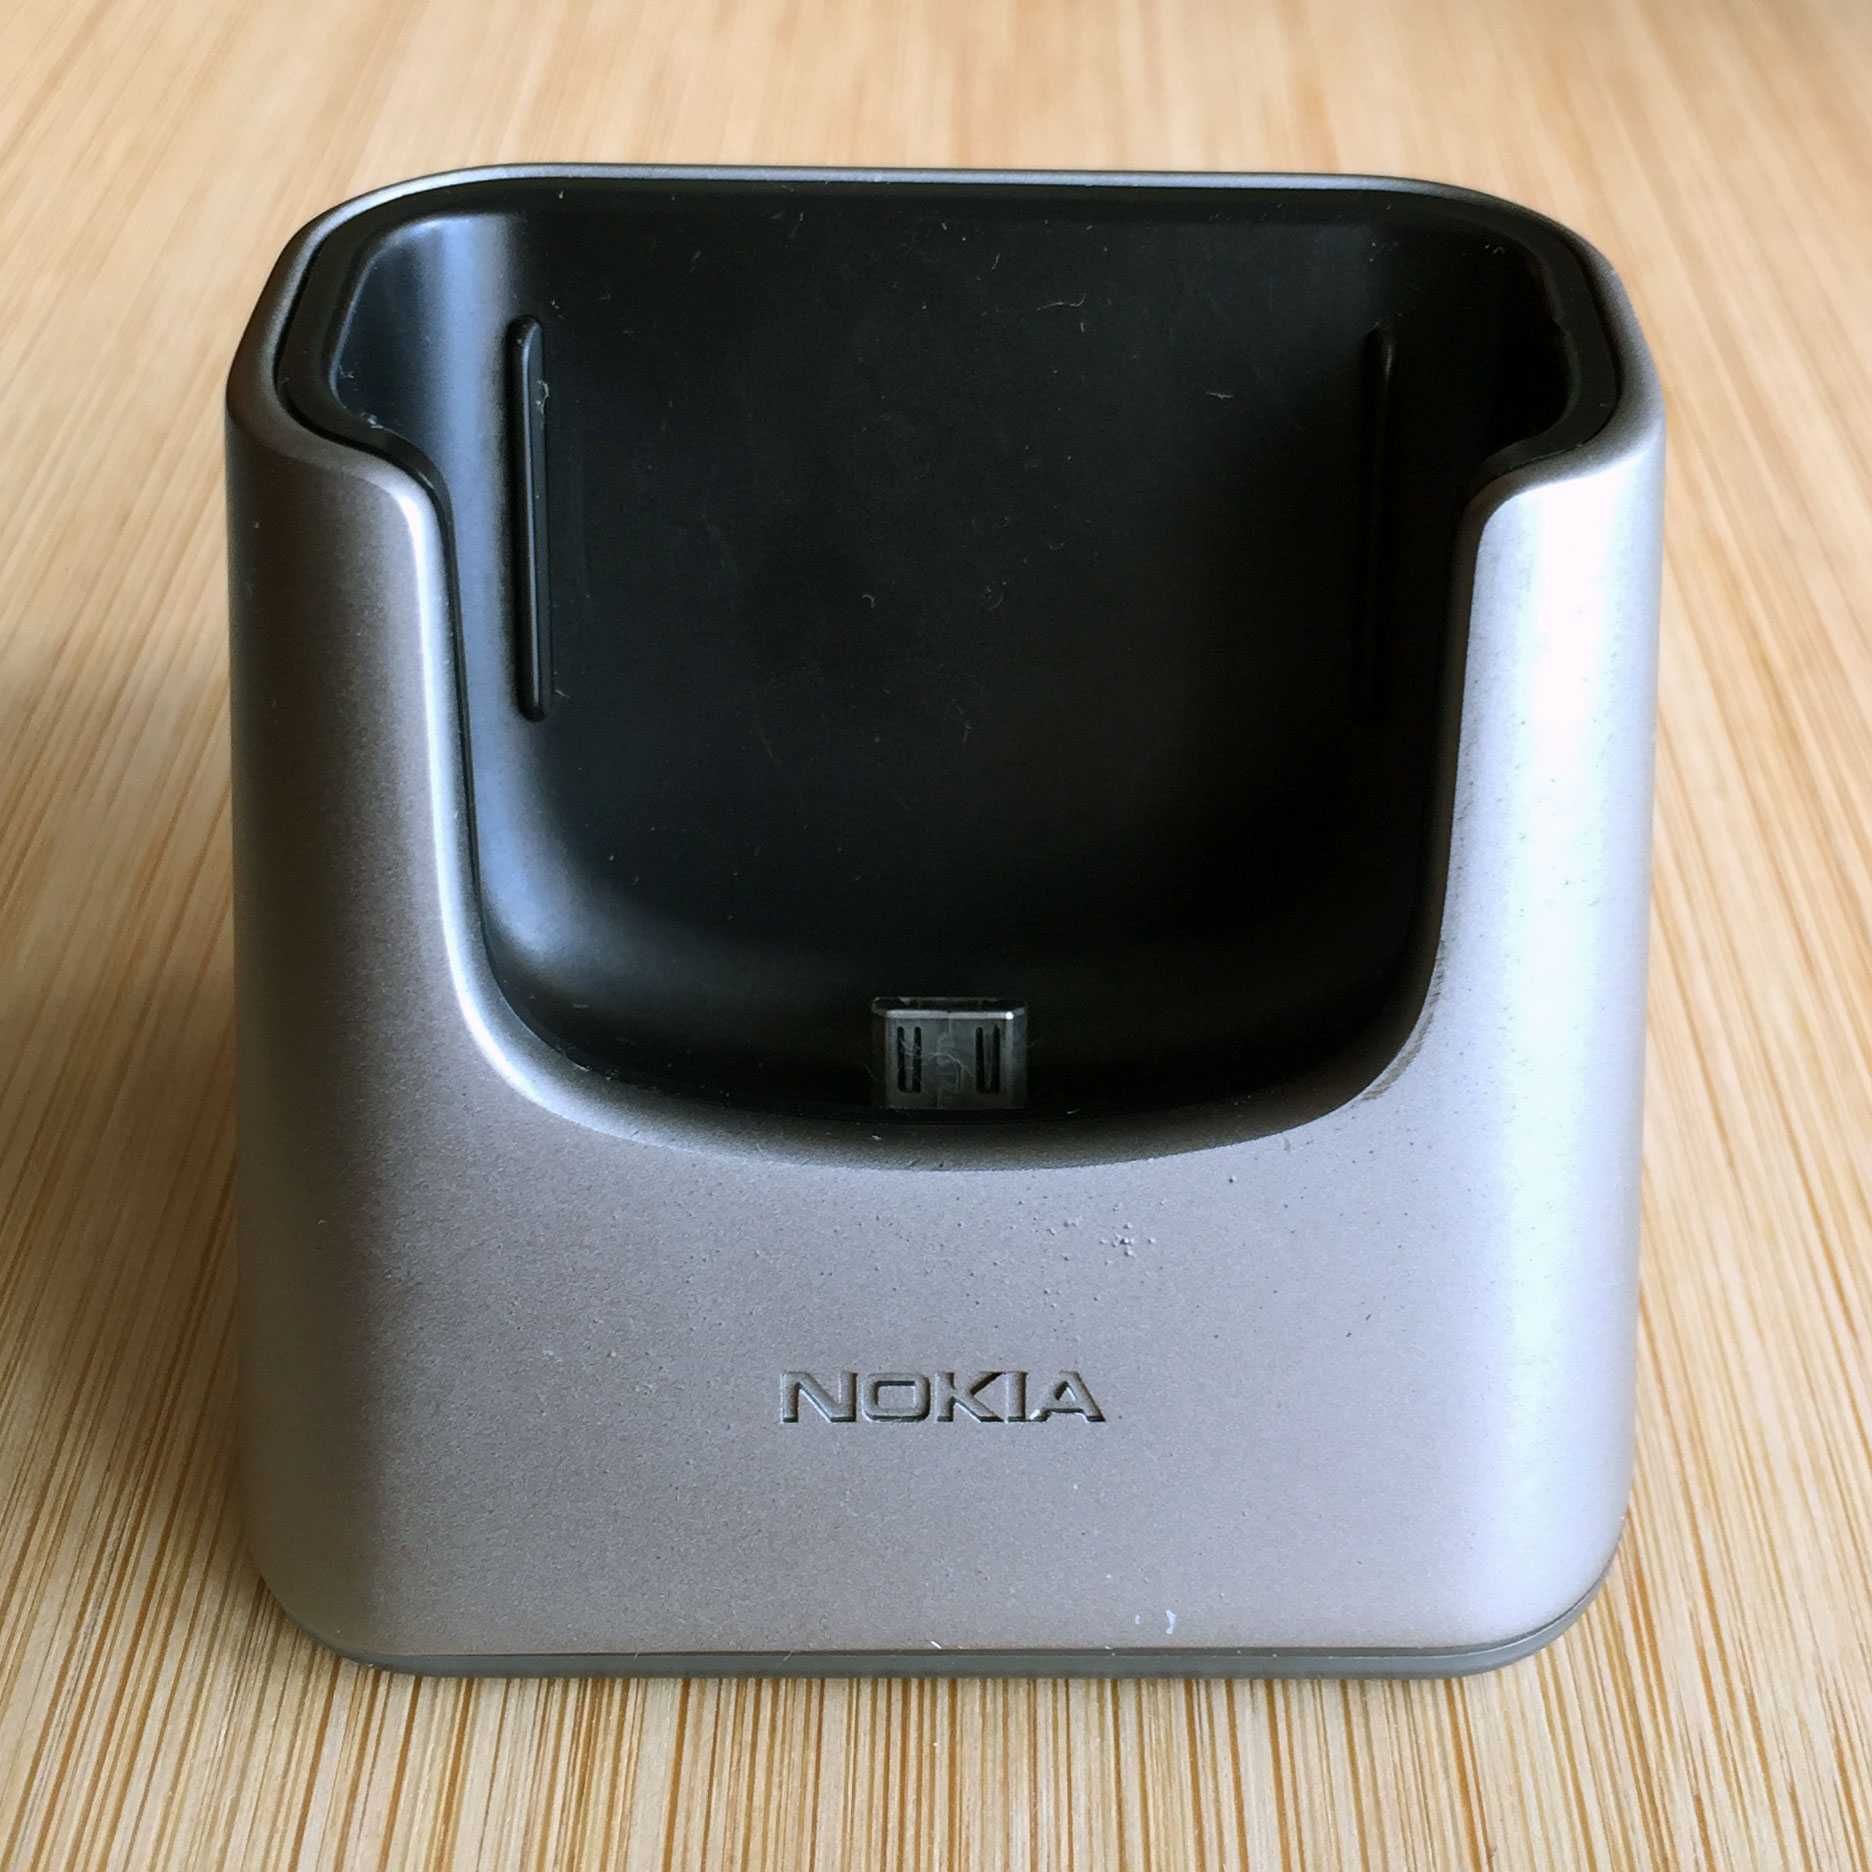 Nokia DT-19 Док станция